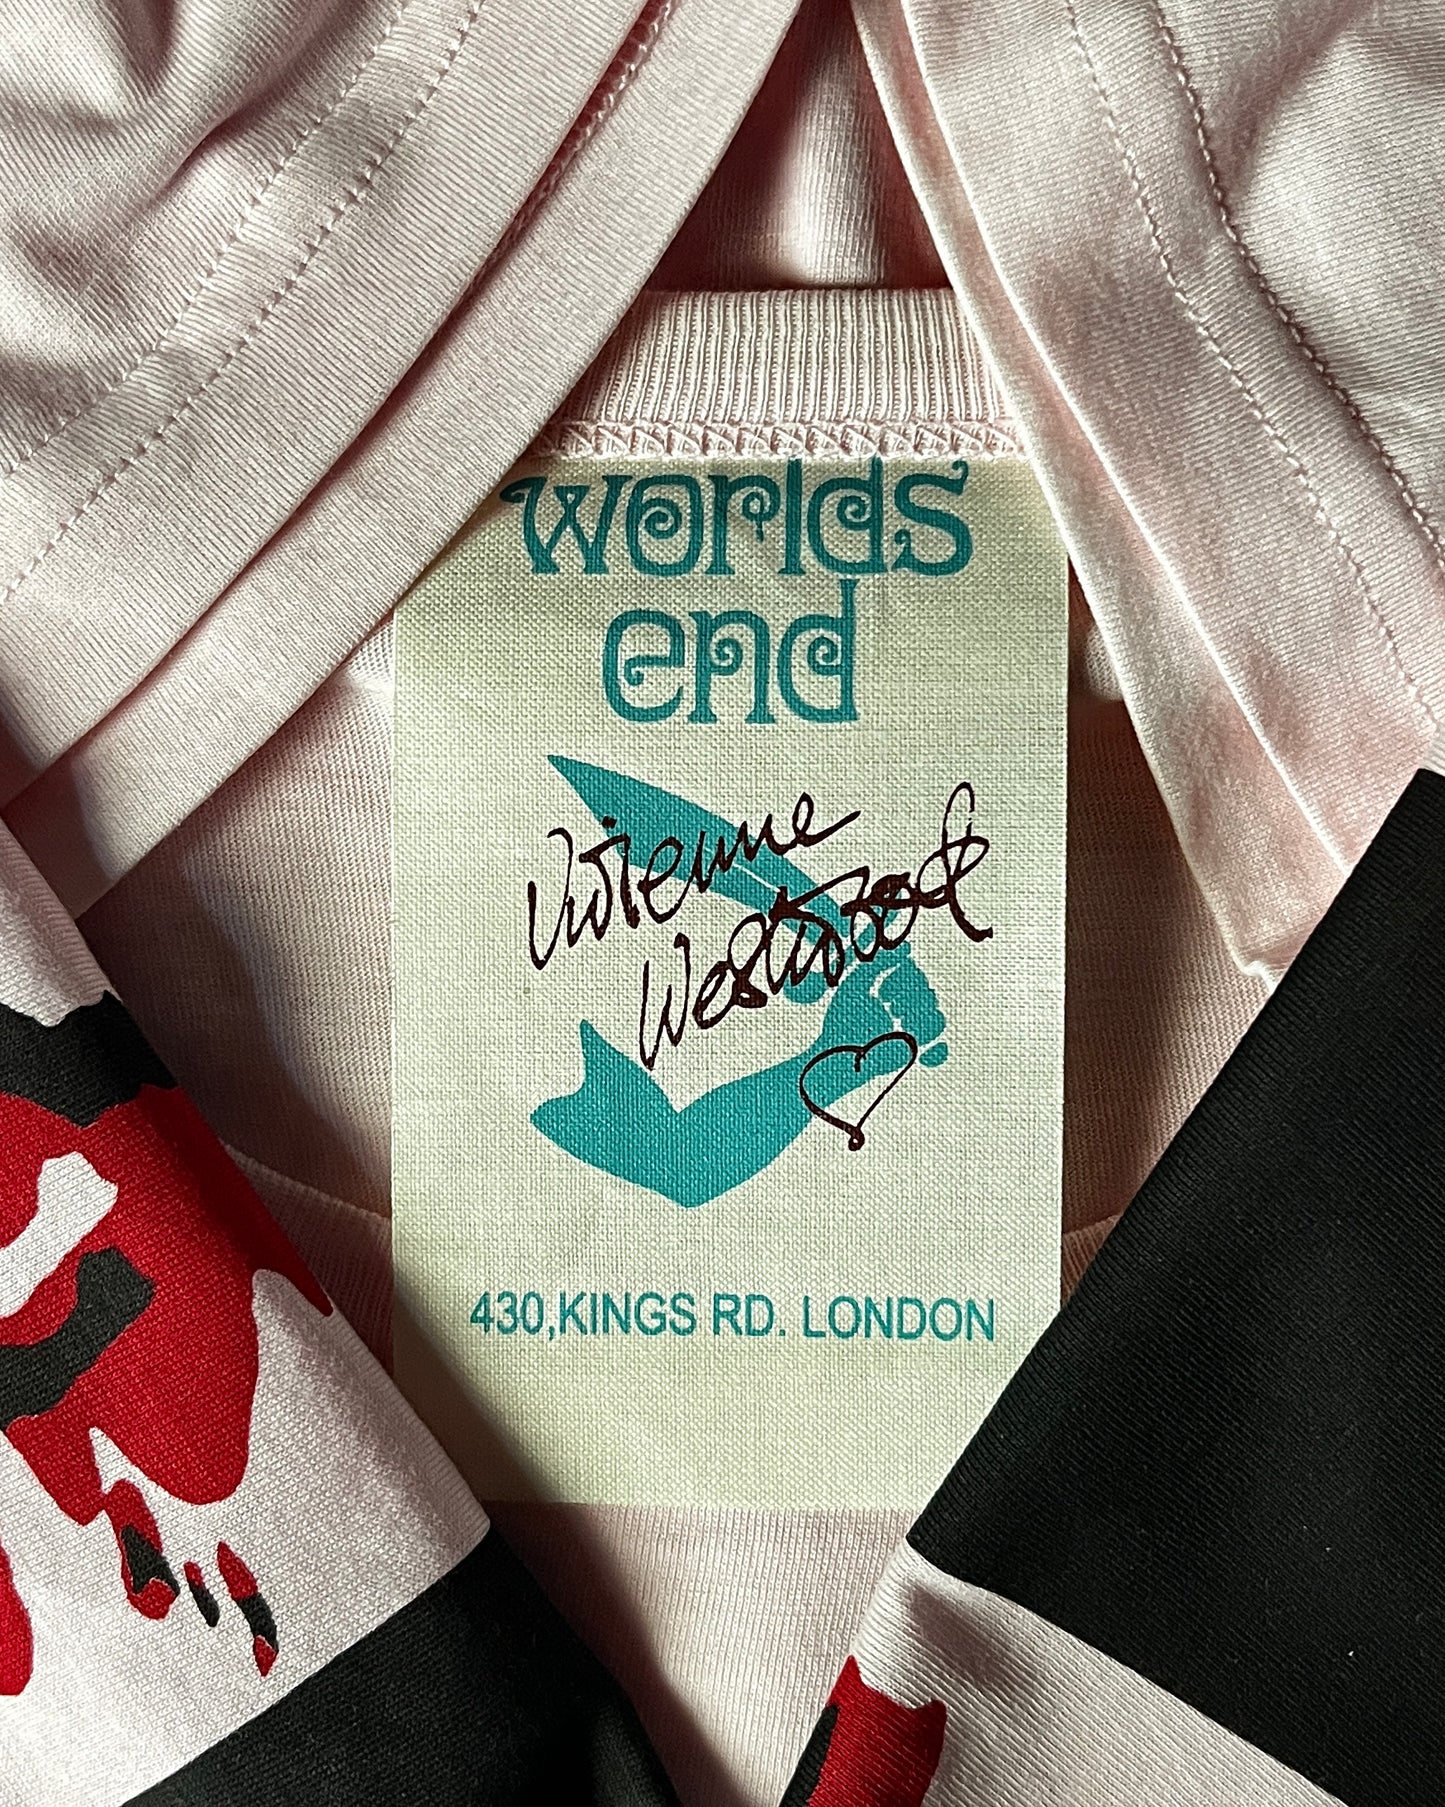 Vivienne Westwood World's End "Destroy" Tee (L)